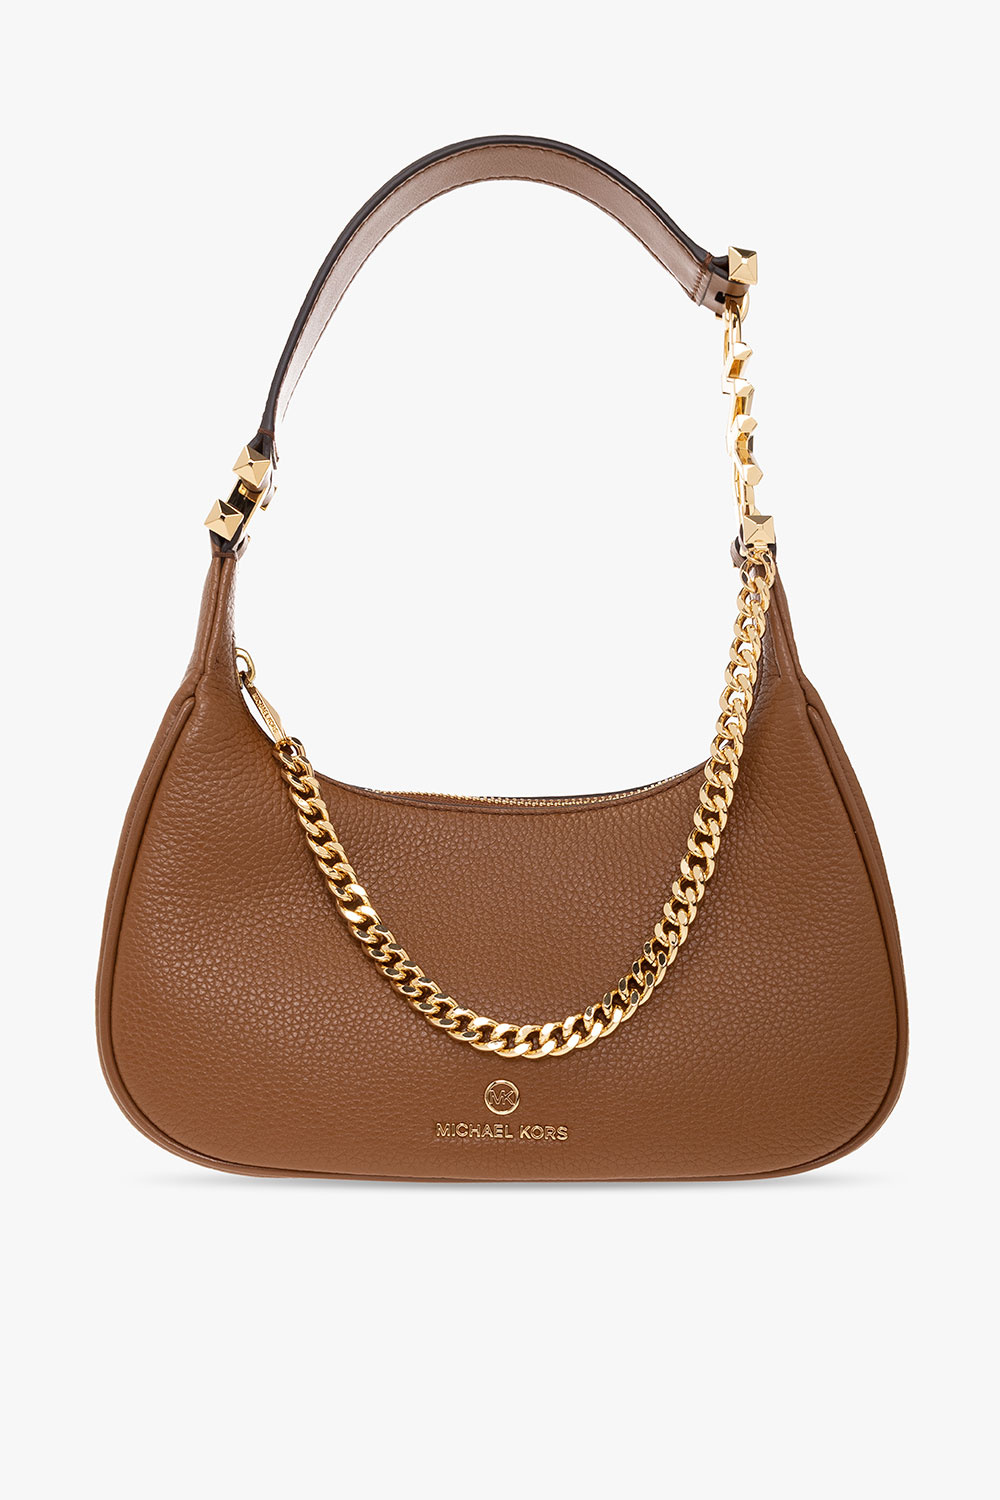 Michael Kors Brooklyn Large Shoulder Grab Tote Bag / Purse/Handbag -  clothing & accessories - by owner - apparel sale